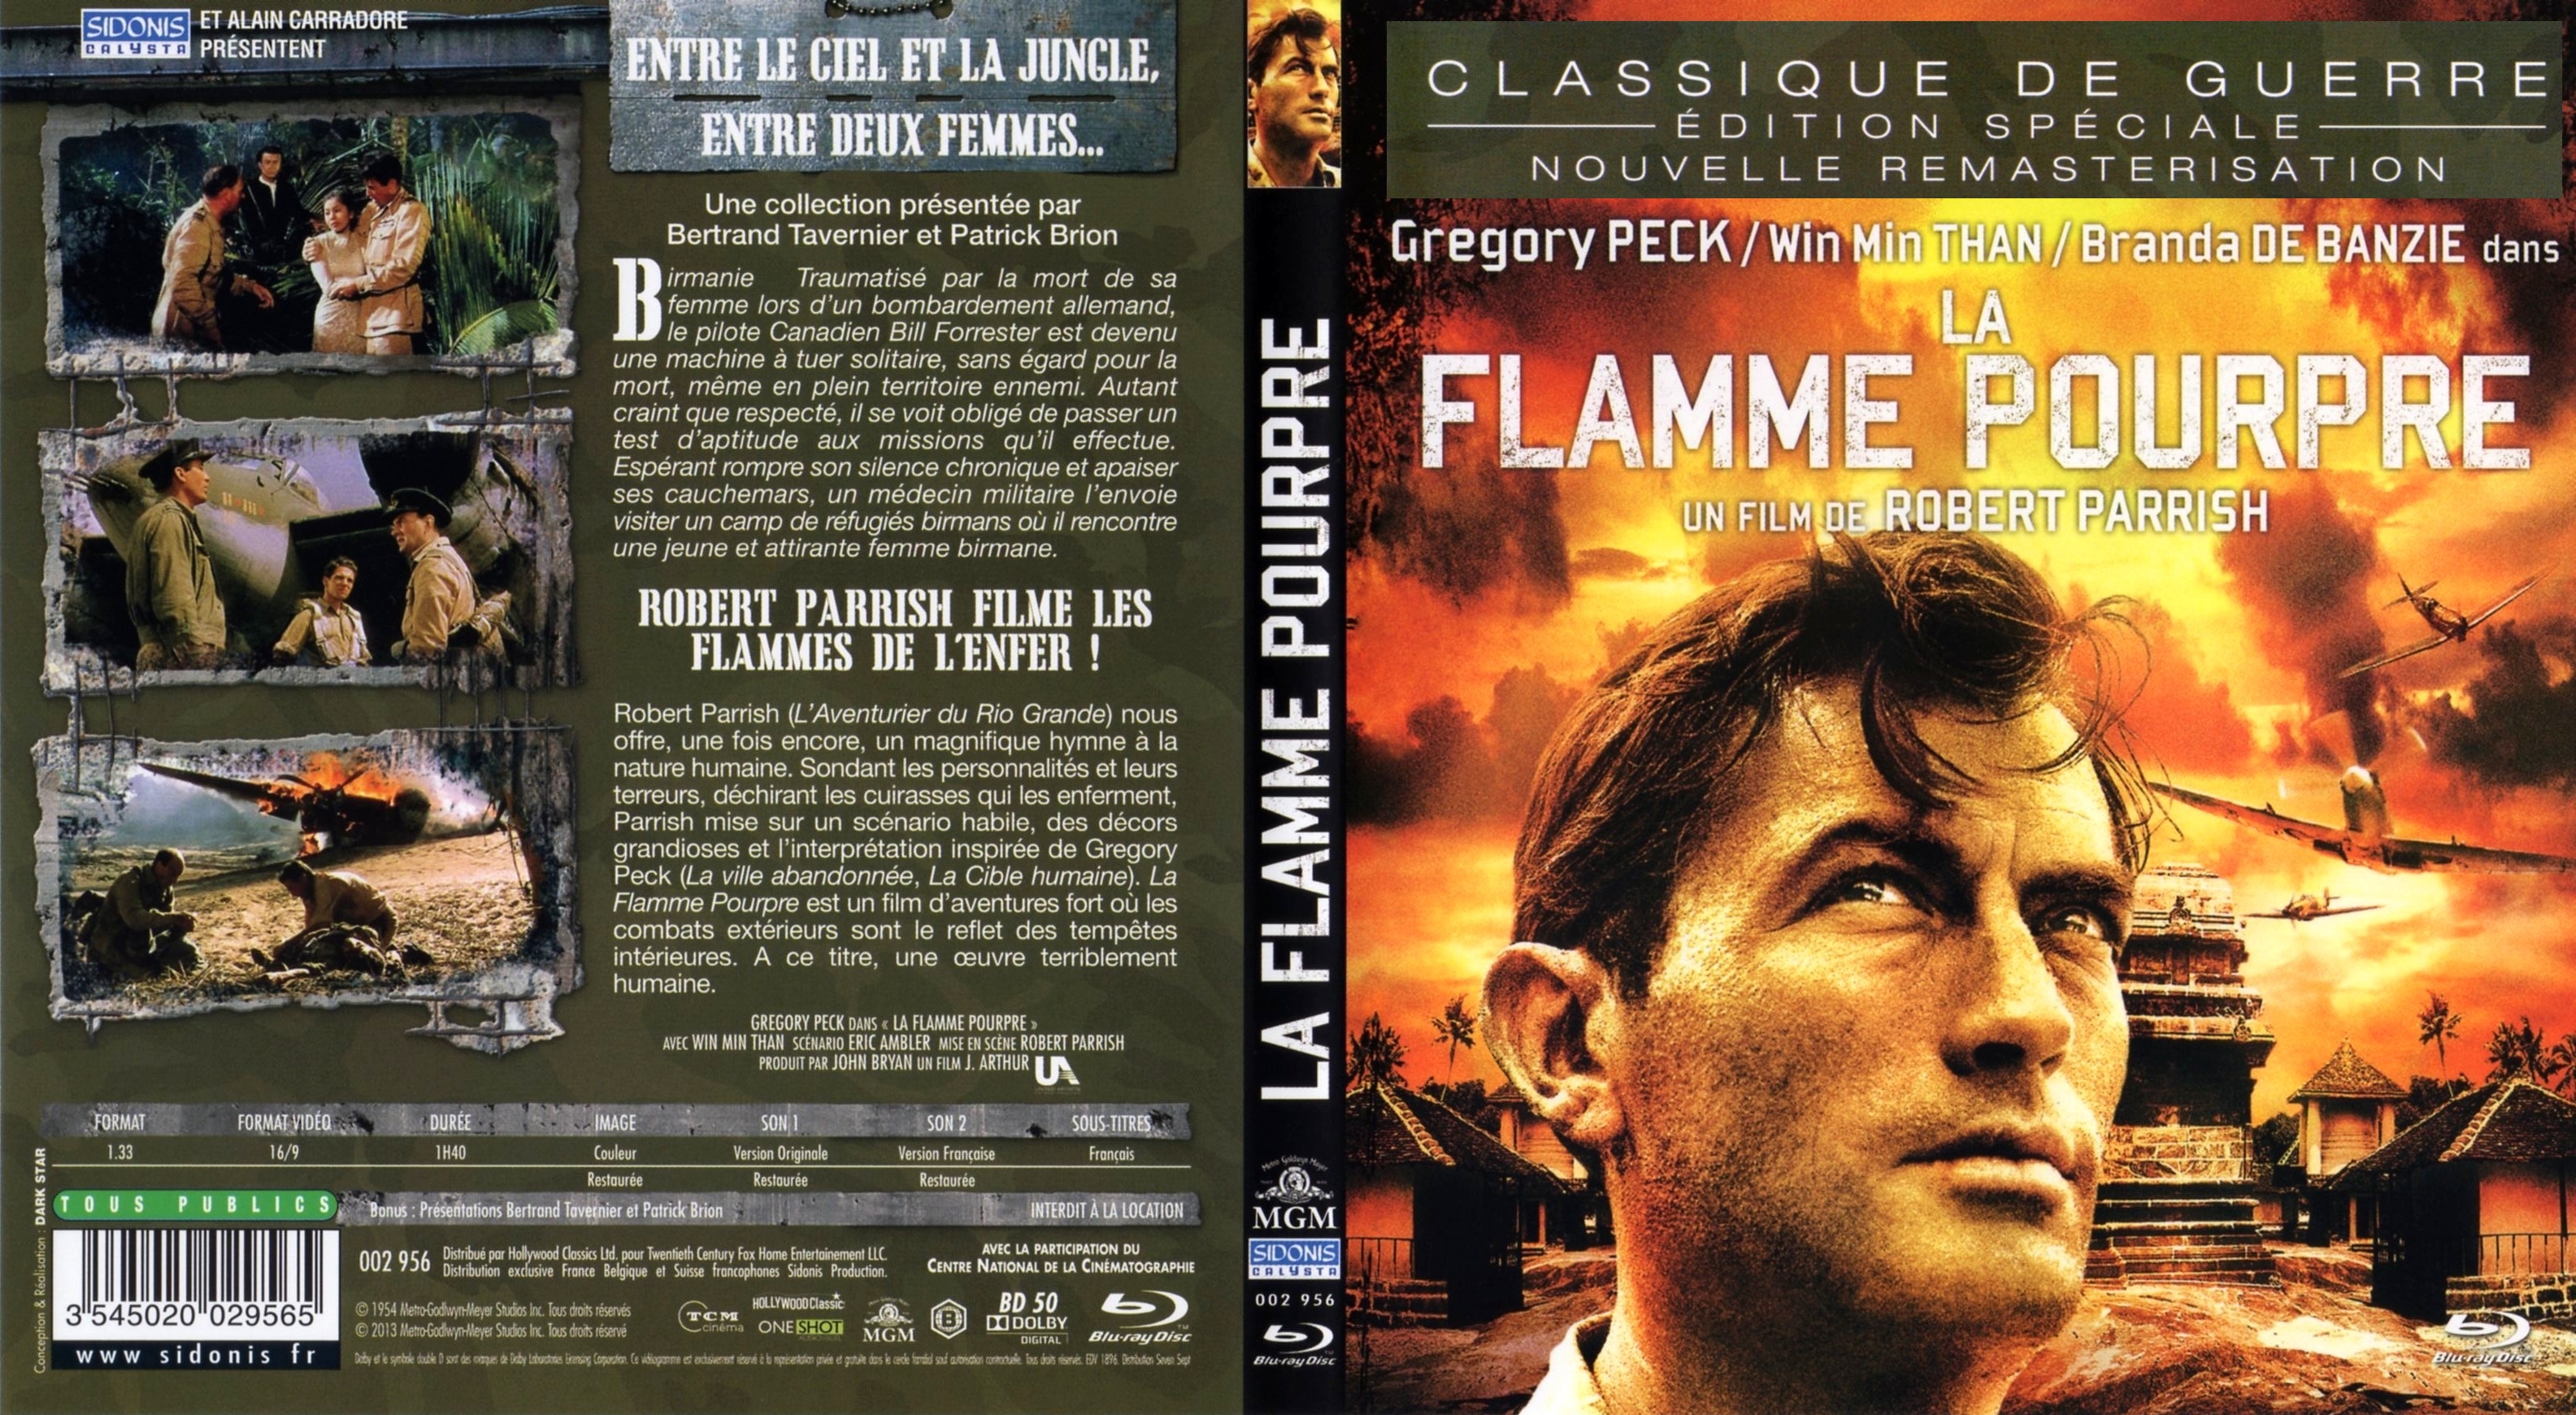 Jaquette DVD La flamme pourpre (BLU-RAY)